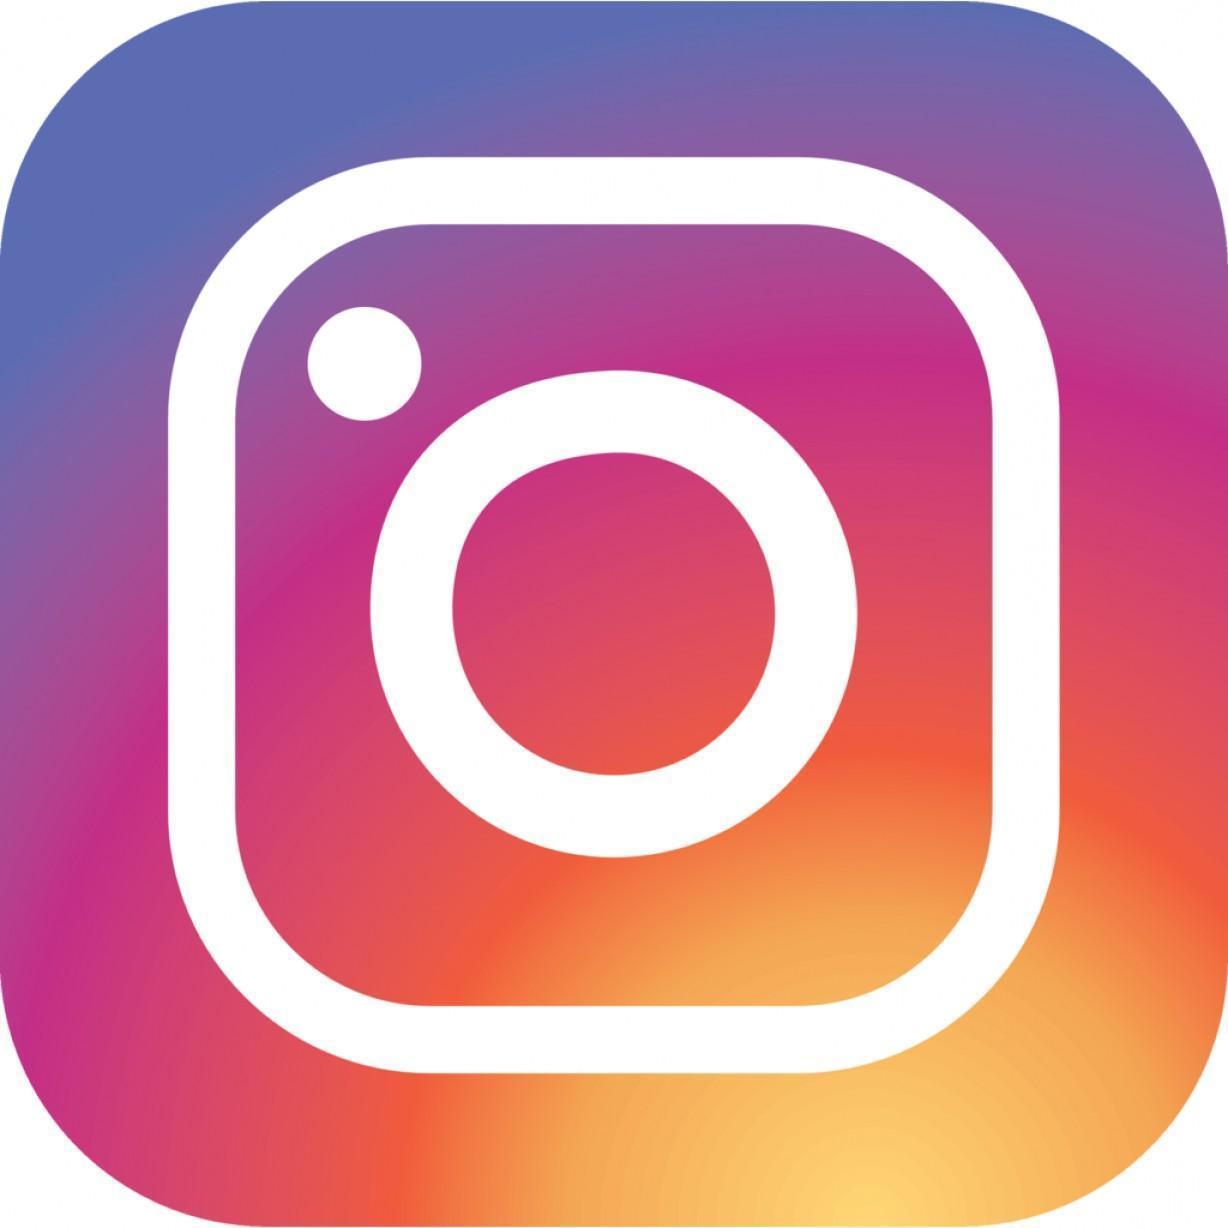 instagram安卓版